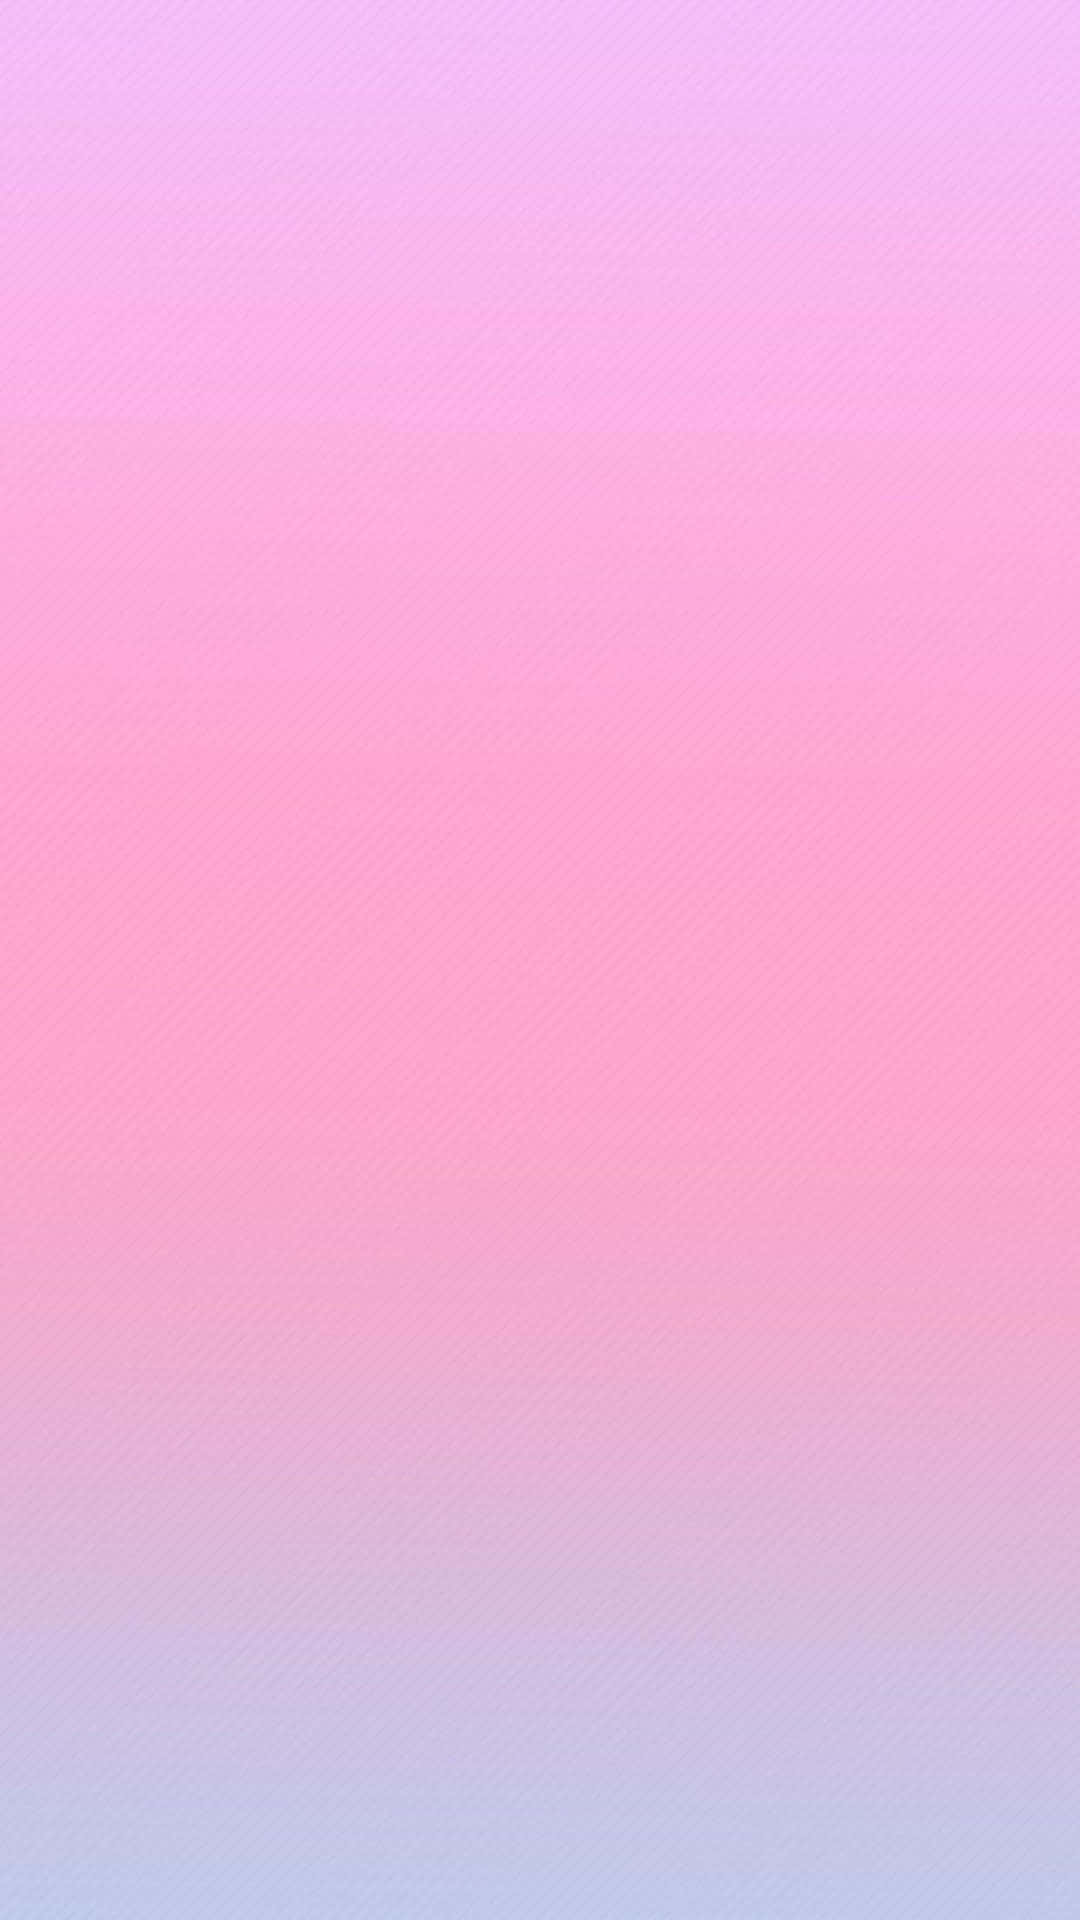 Download Pink Gradient Background 1242 X 2208 | Wallpapers.com